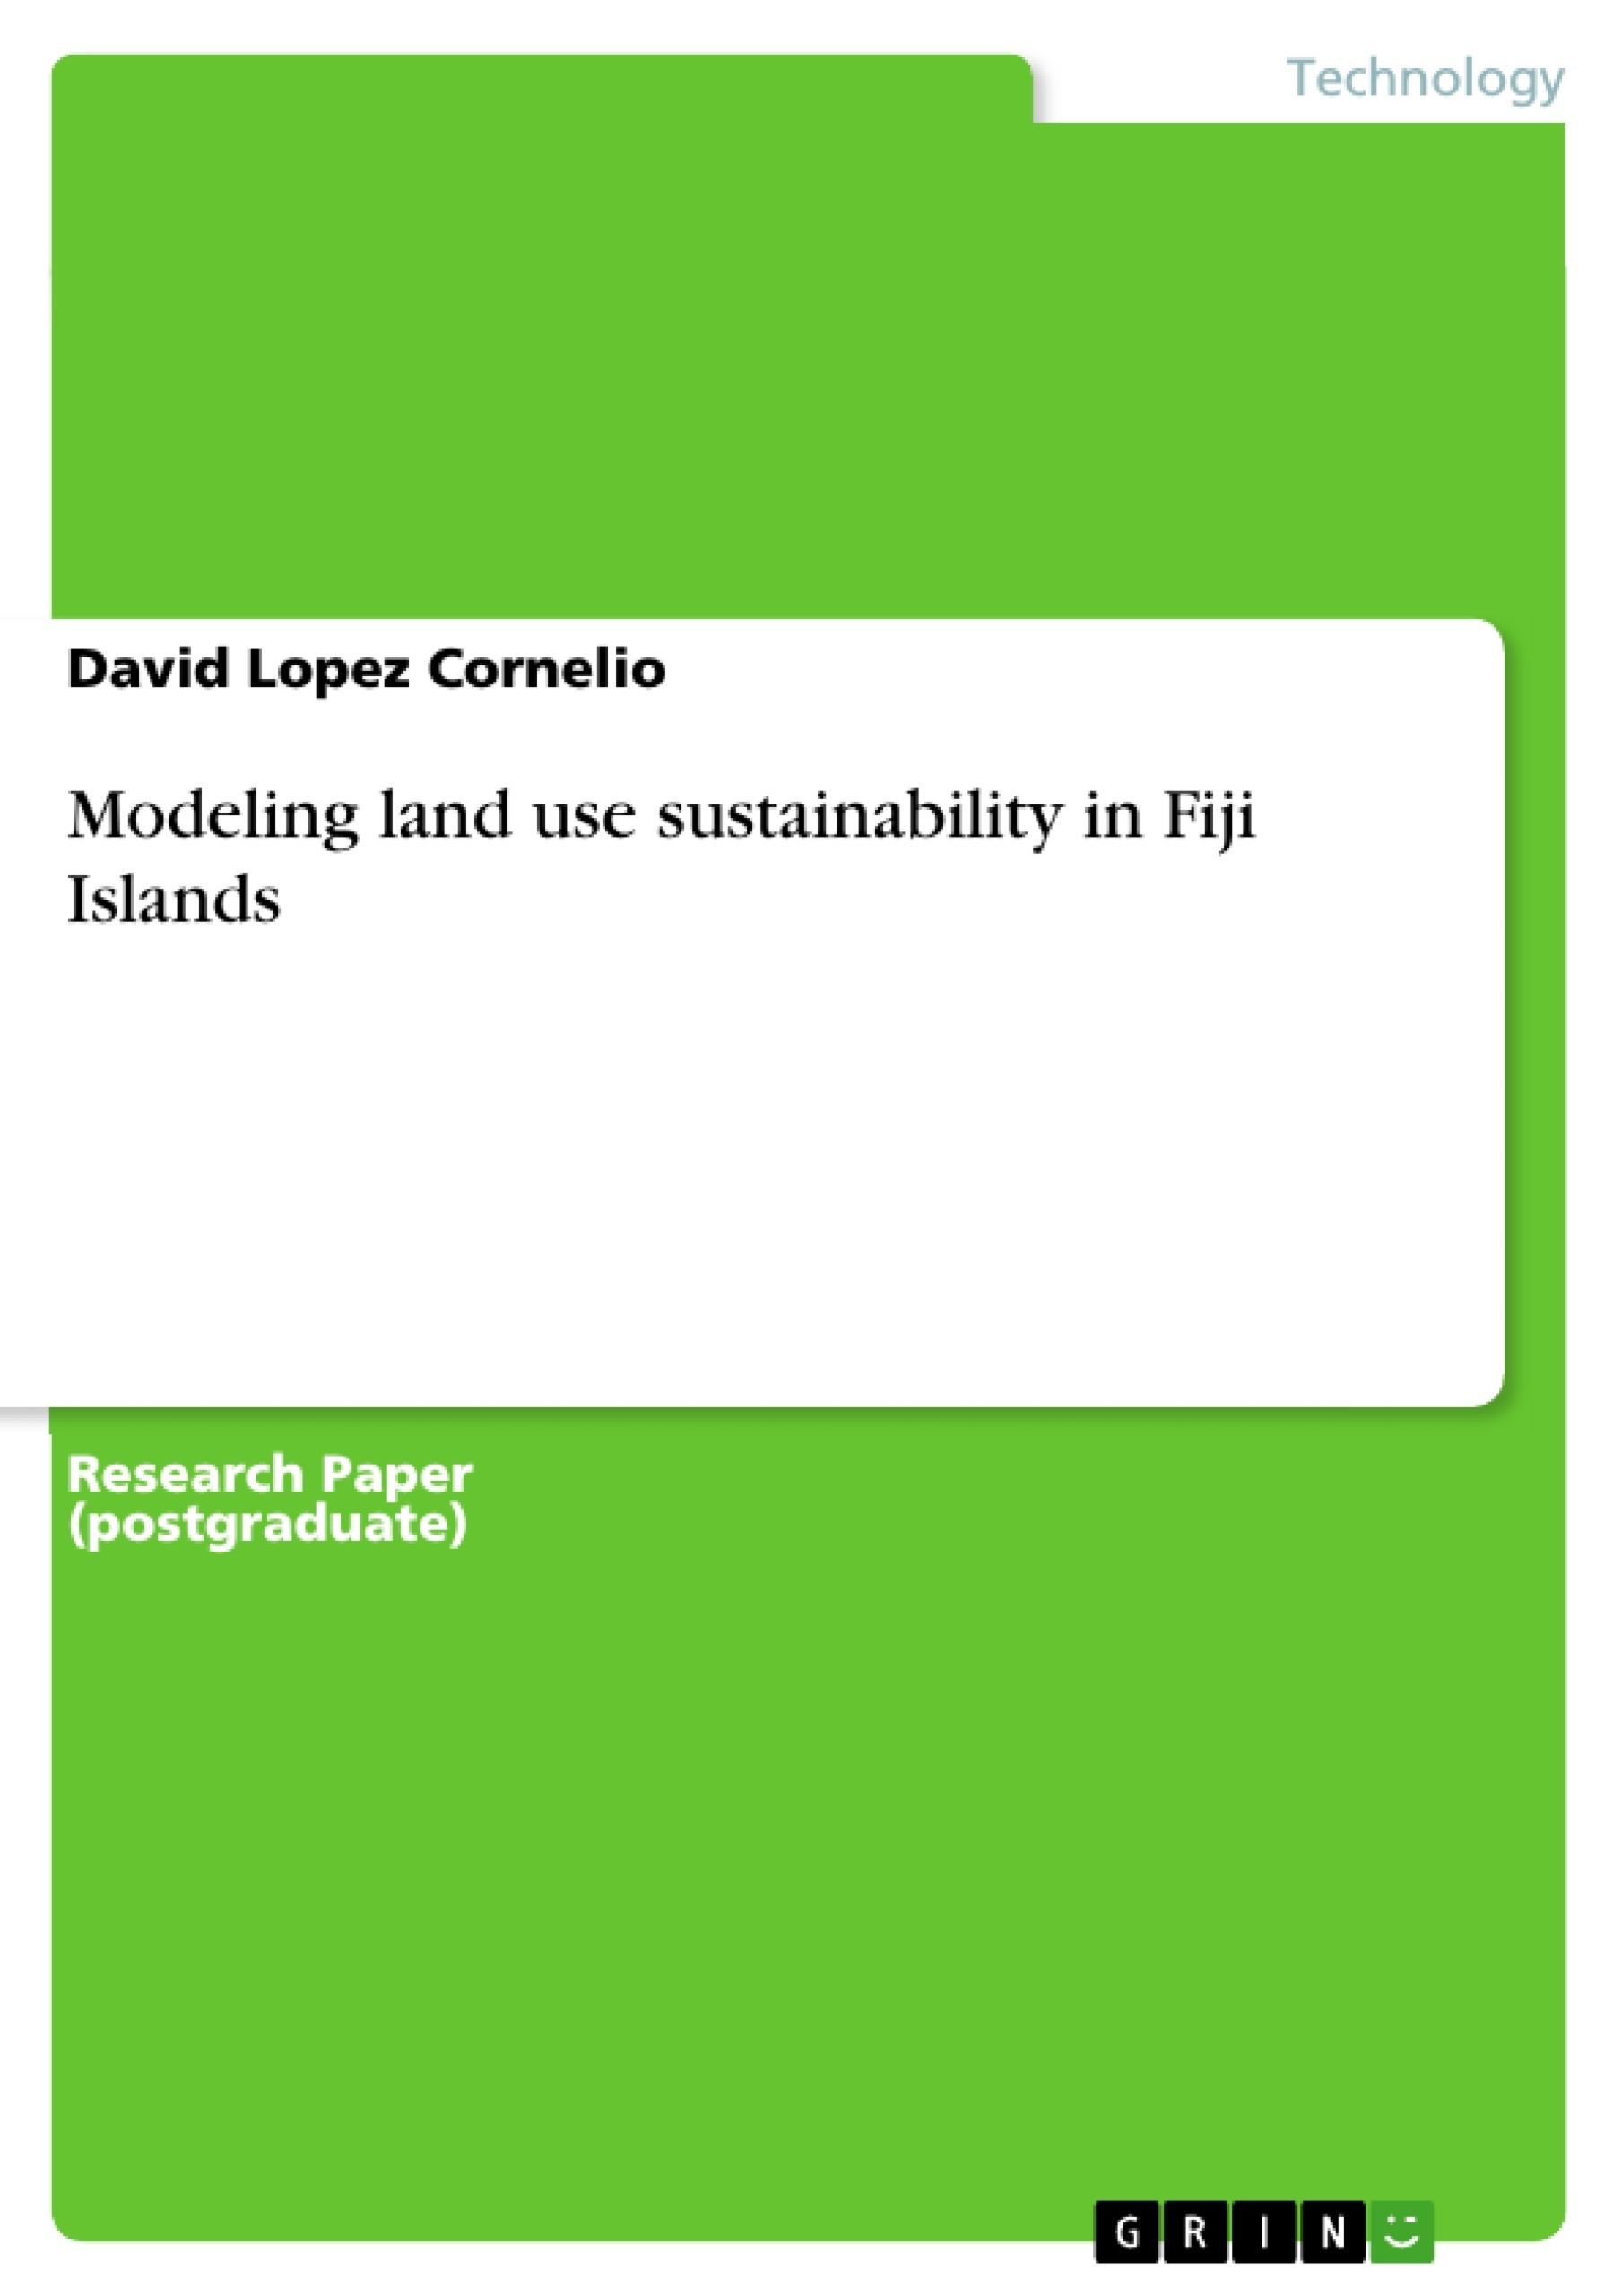 Title: Modeling land use sustainability in Fiji Islands